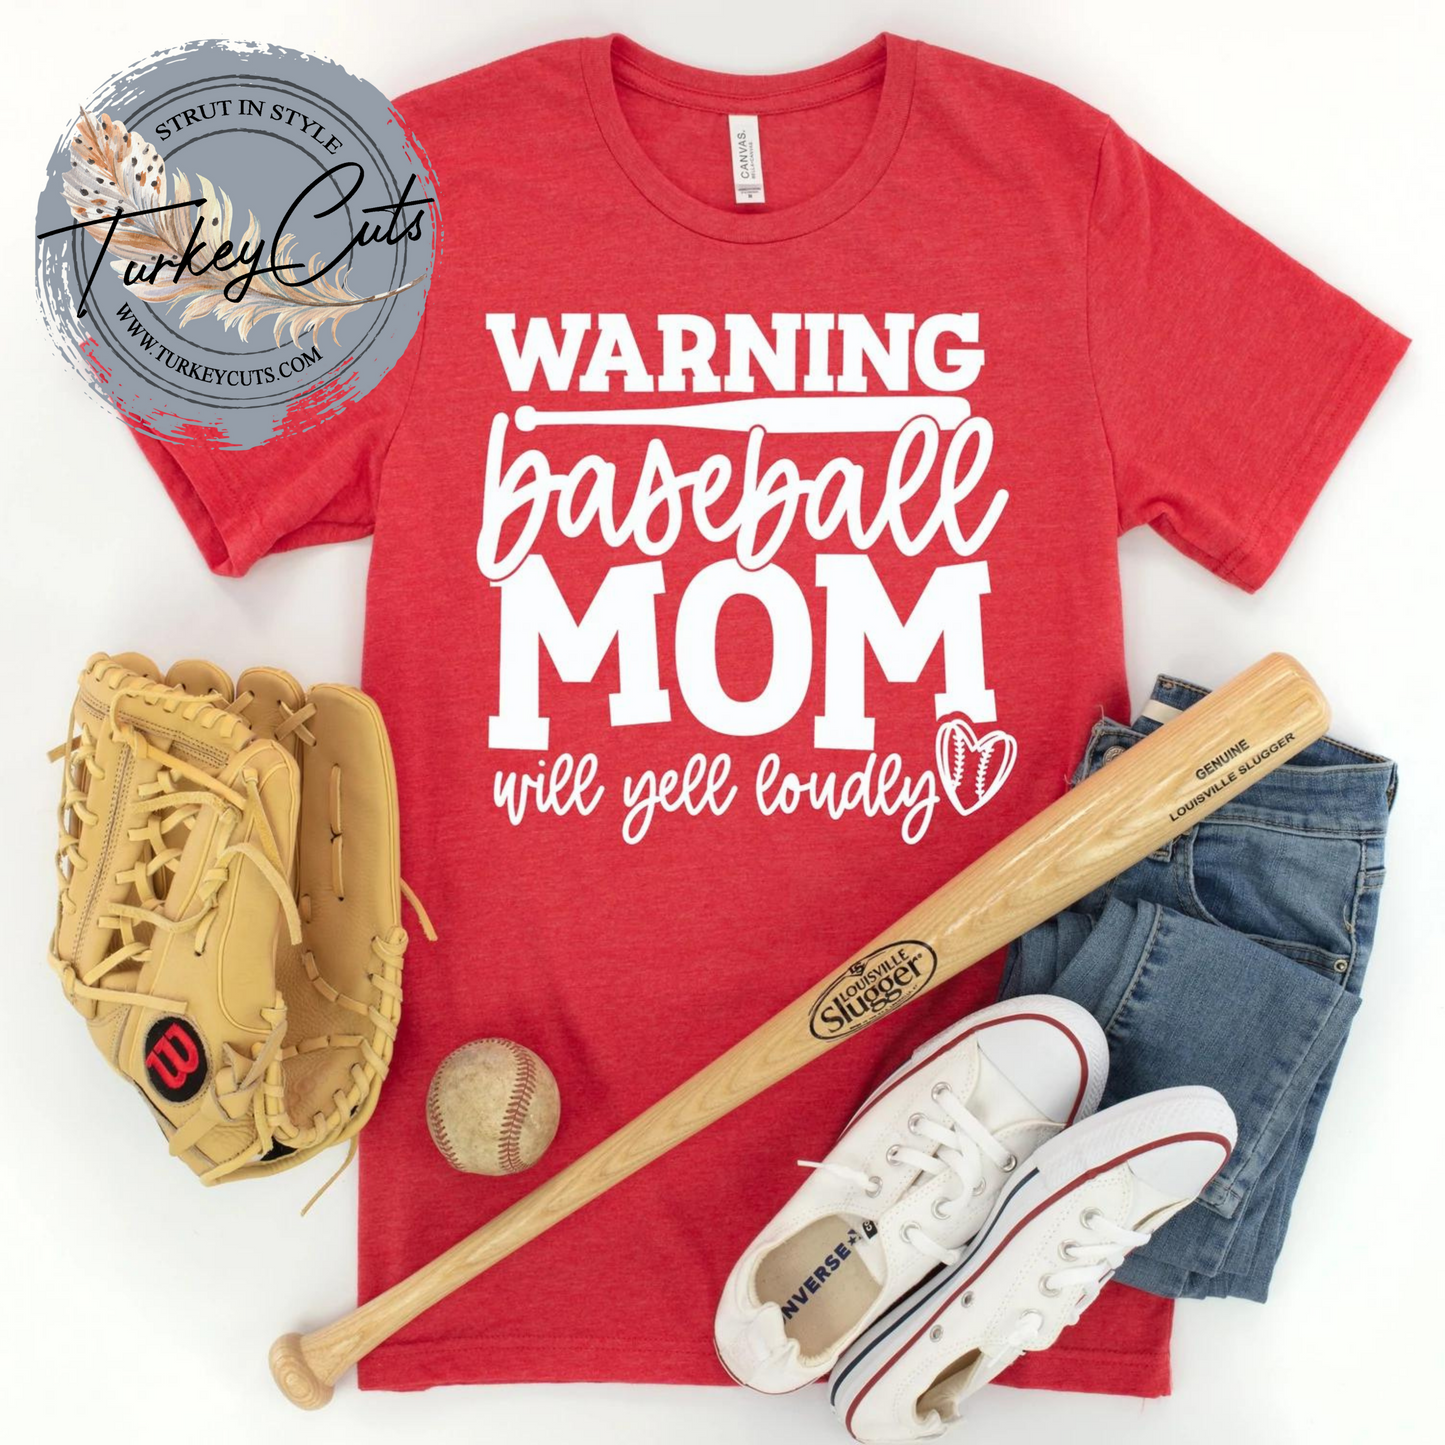 Warning Baseball Mom